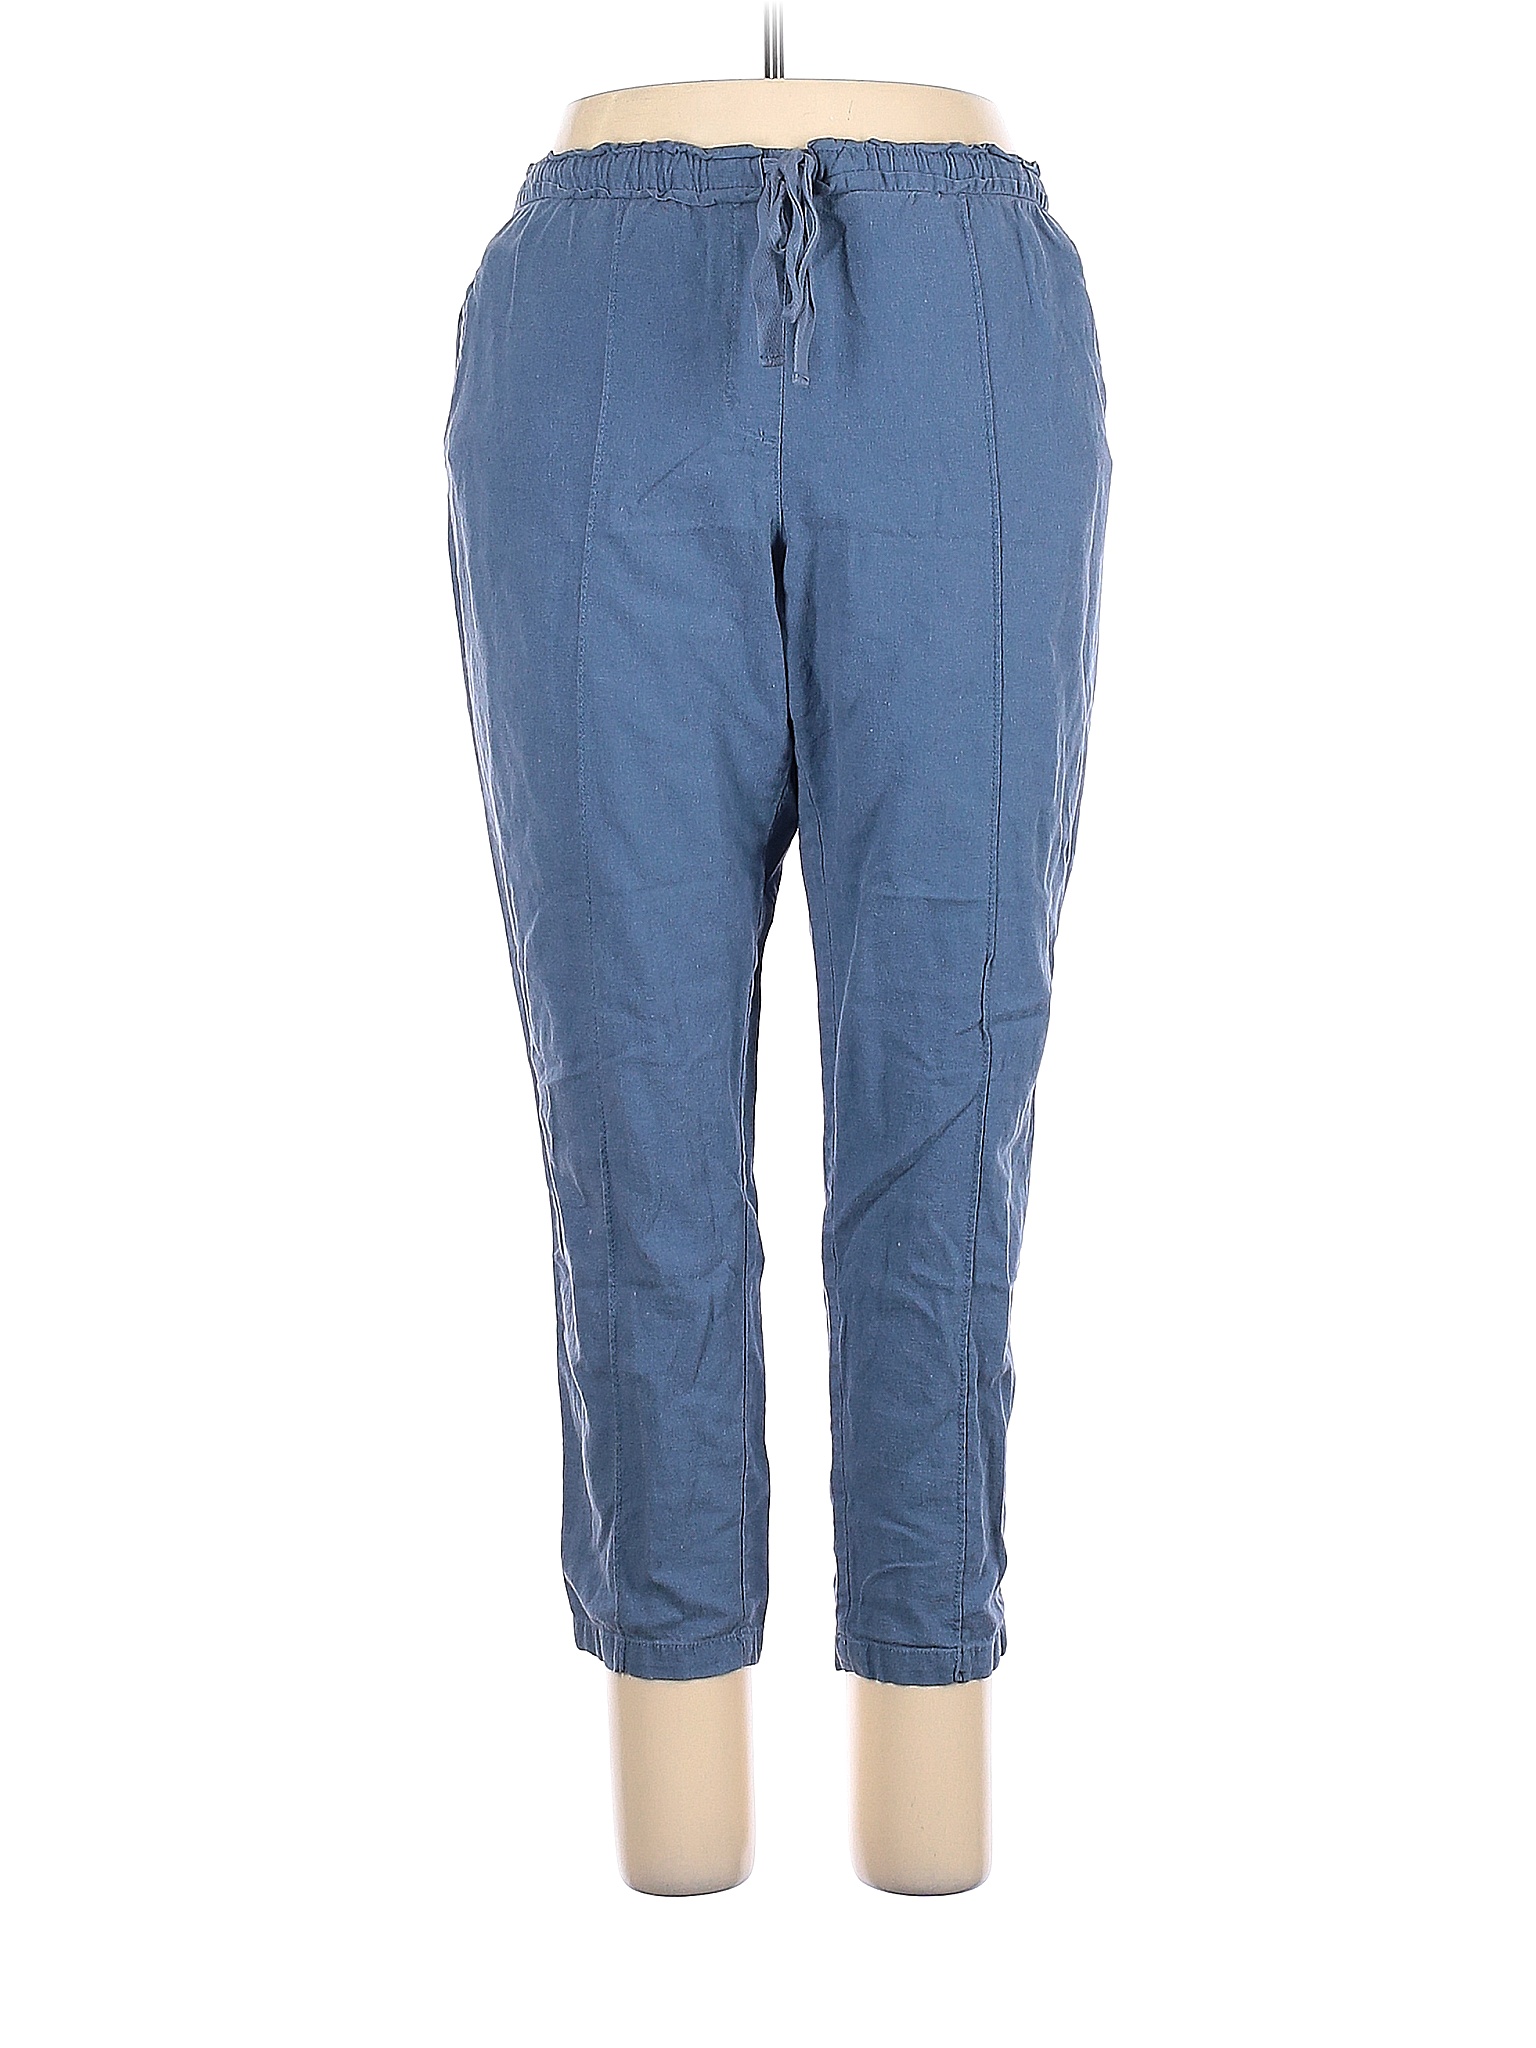 Per Se Solid Blue Linen Pants Size XL - 76% off | thredUP